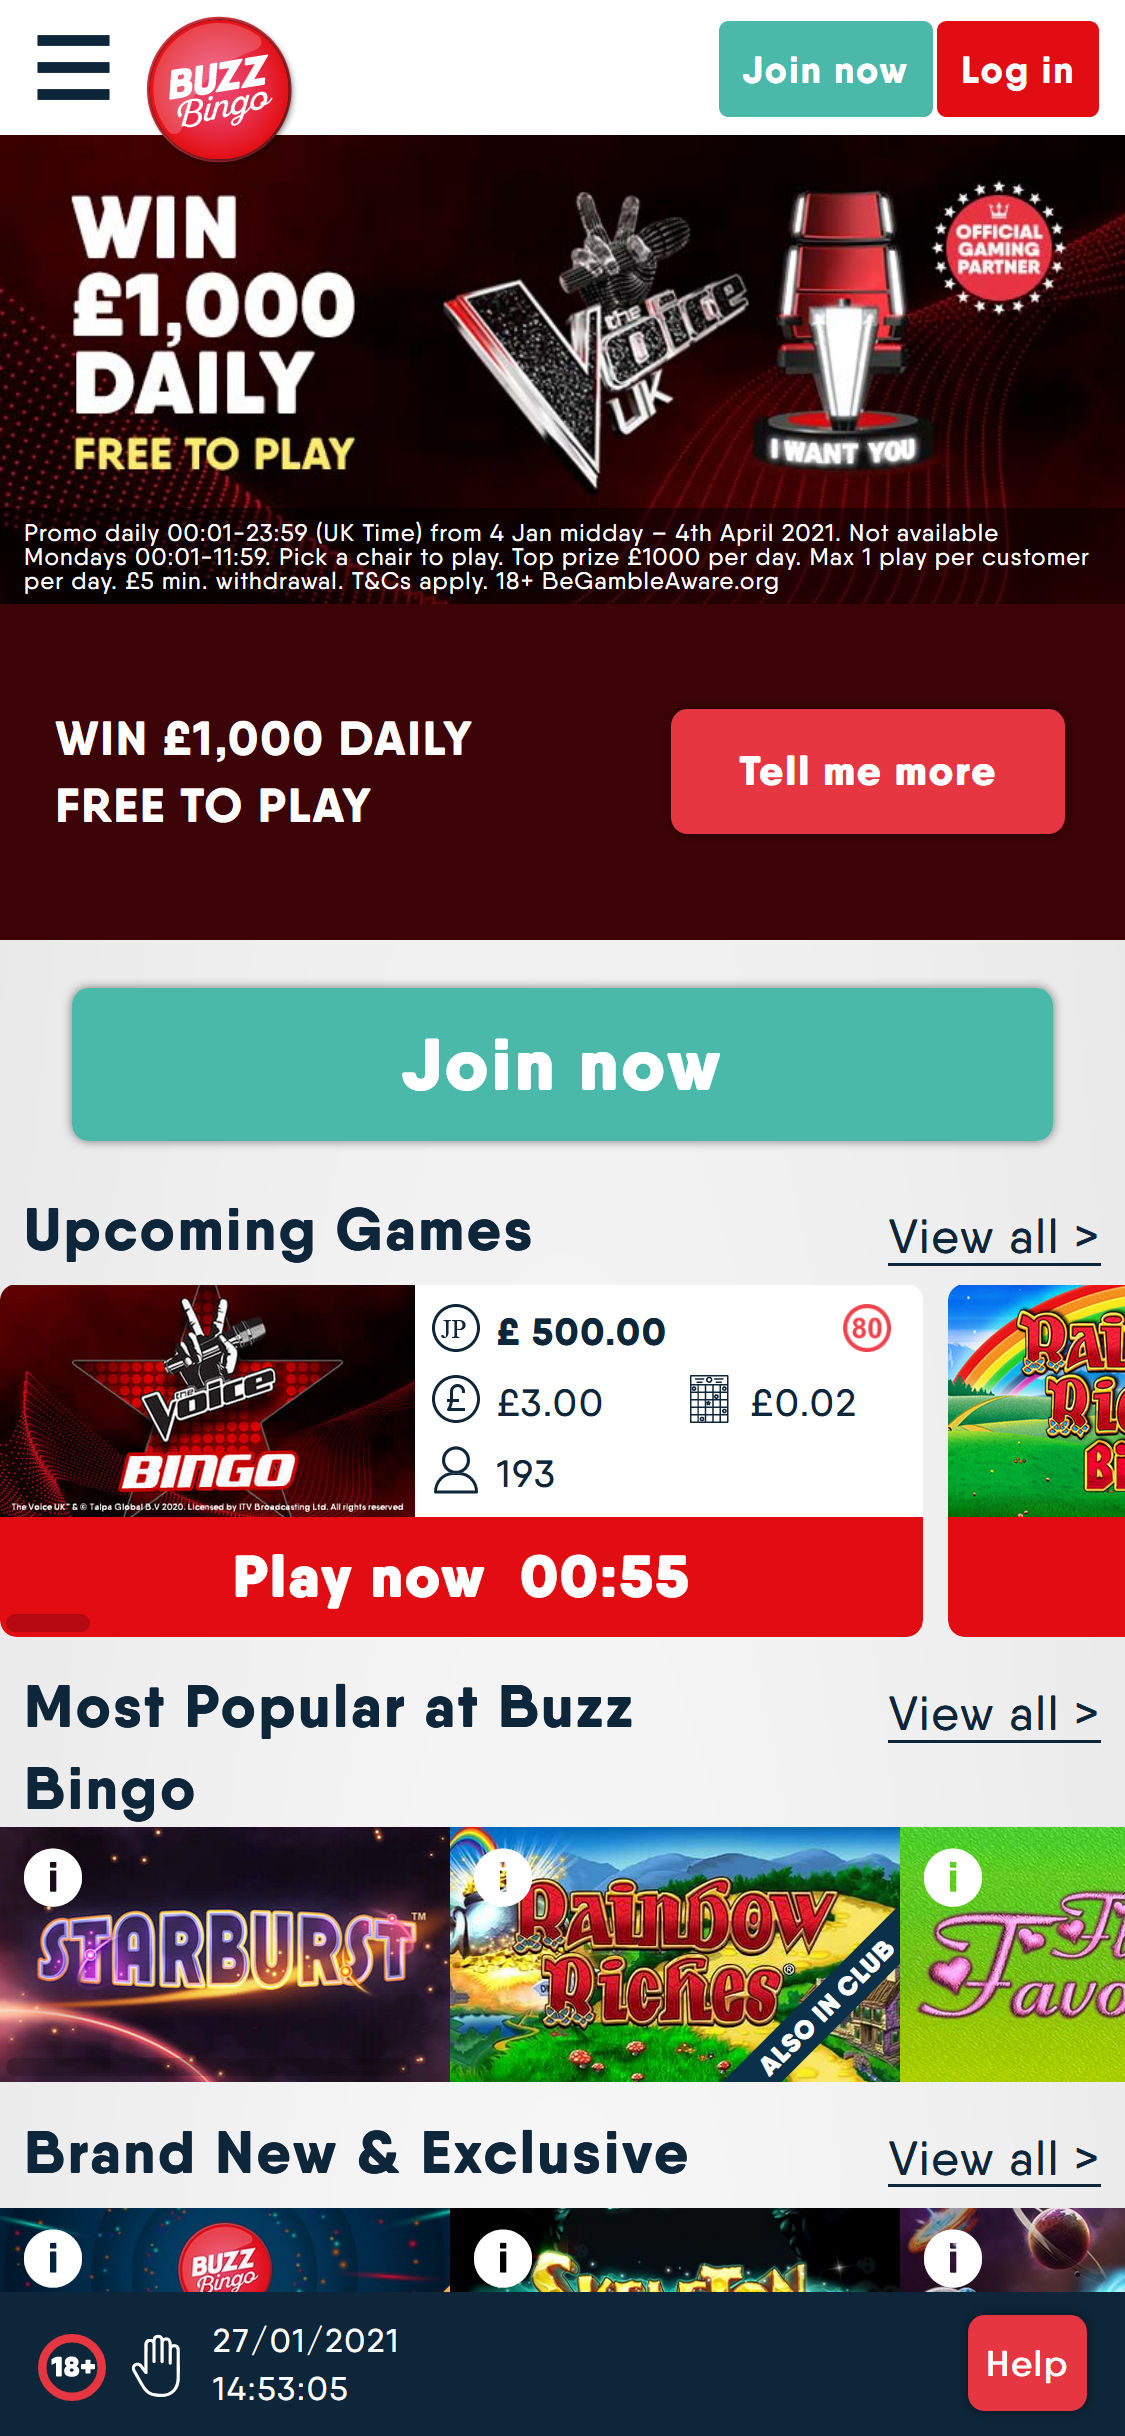 Buzz Bingo Casino Mobile Review